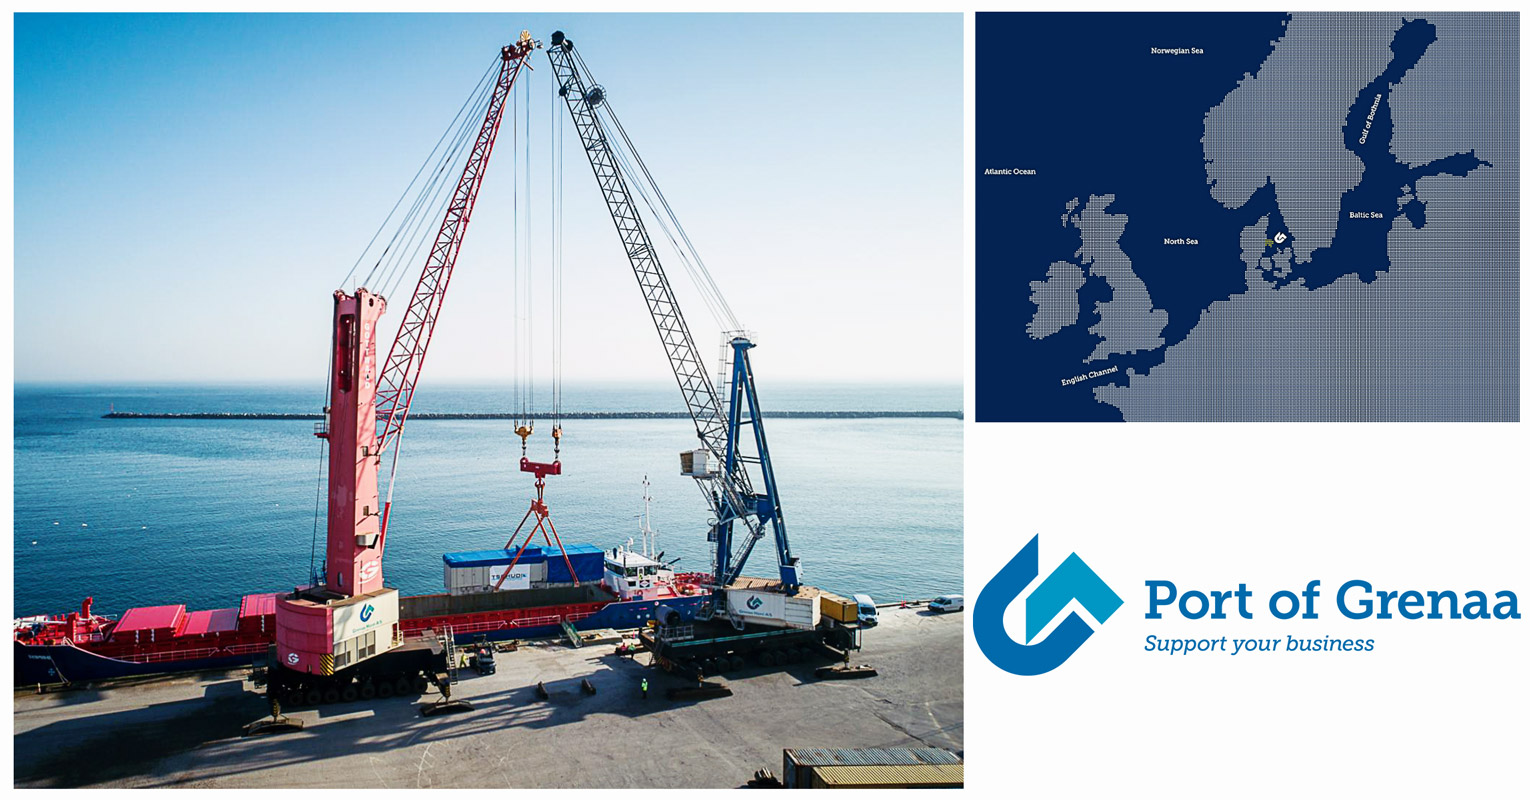 New service provider representing Denmark – Port of Grenaa